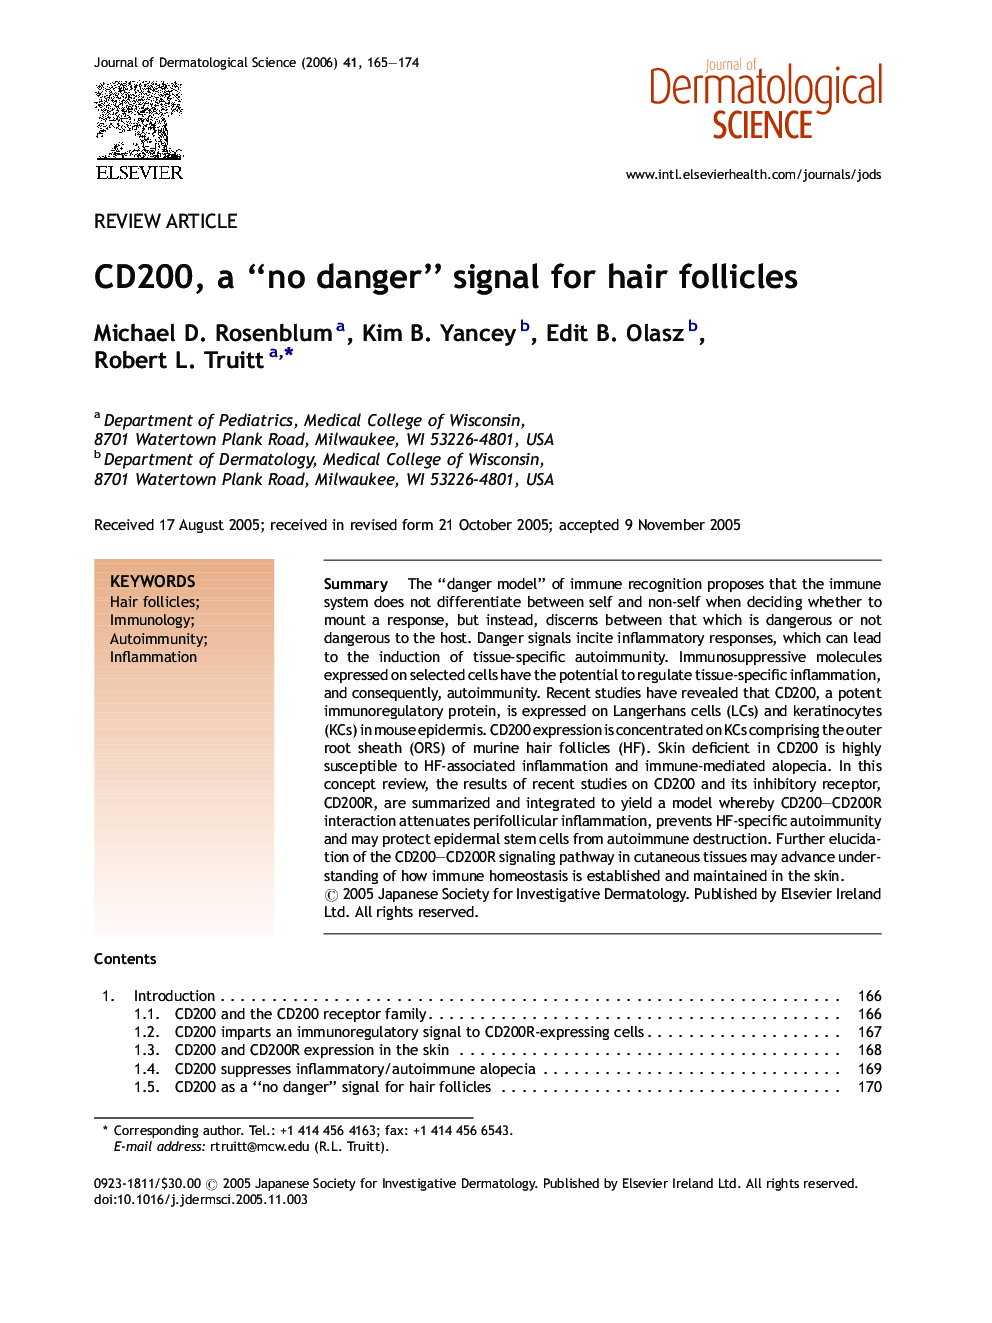 CD200, a “no danger” signal for hair follicles